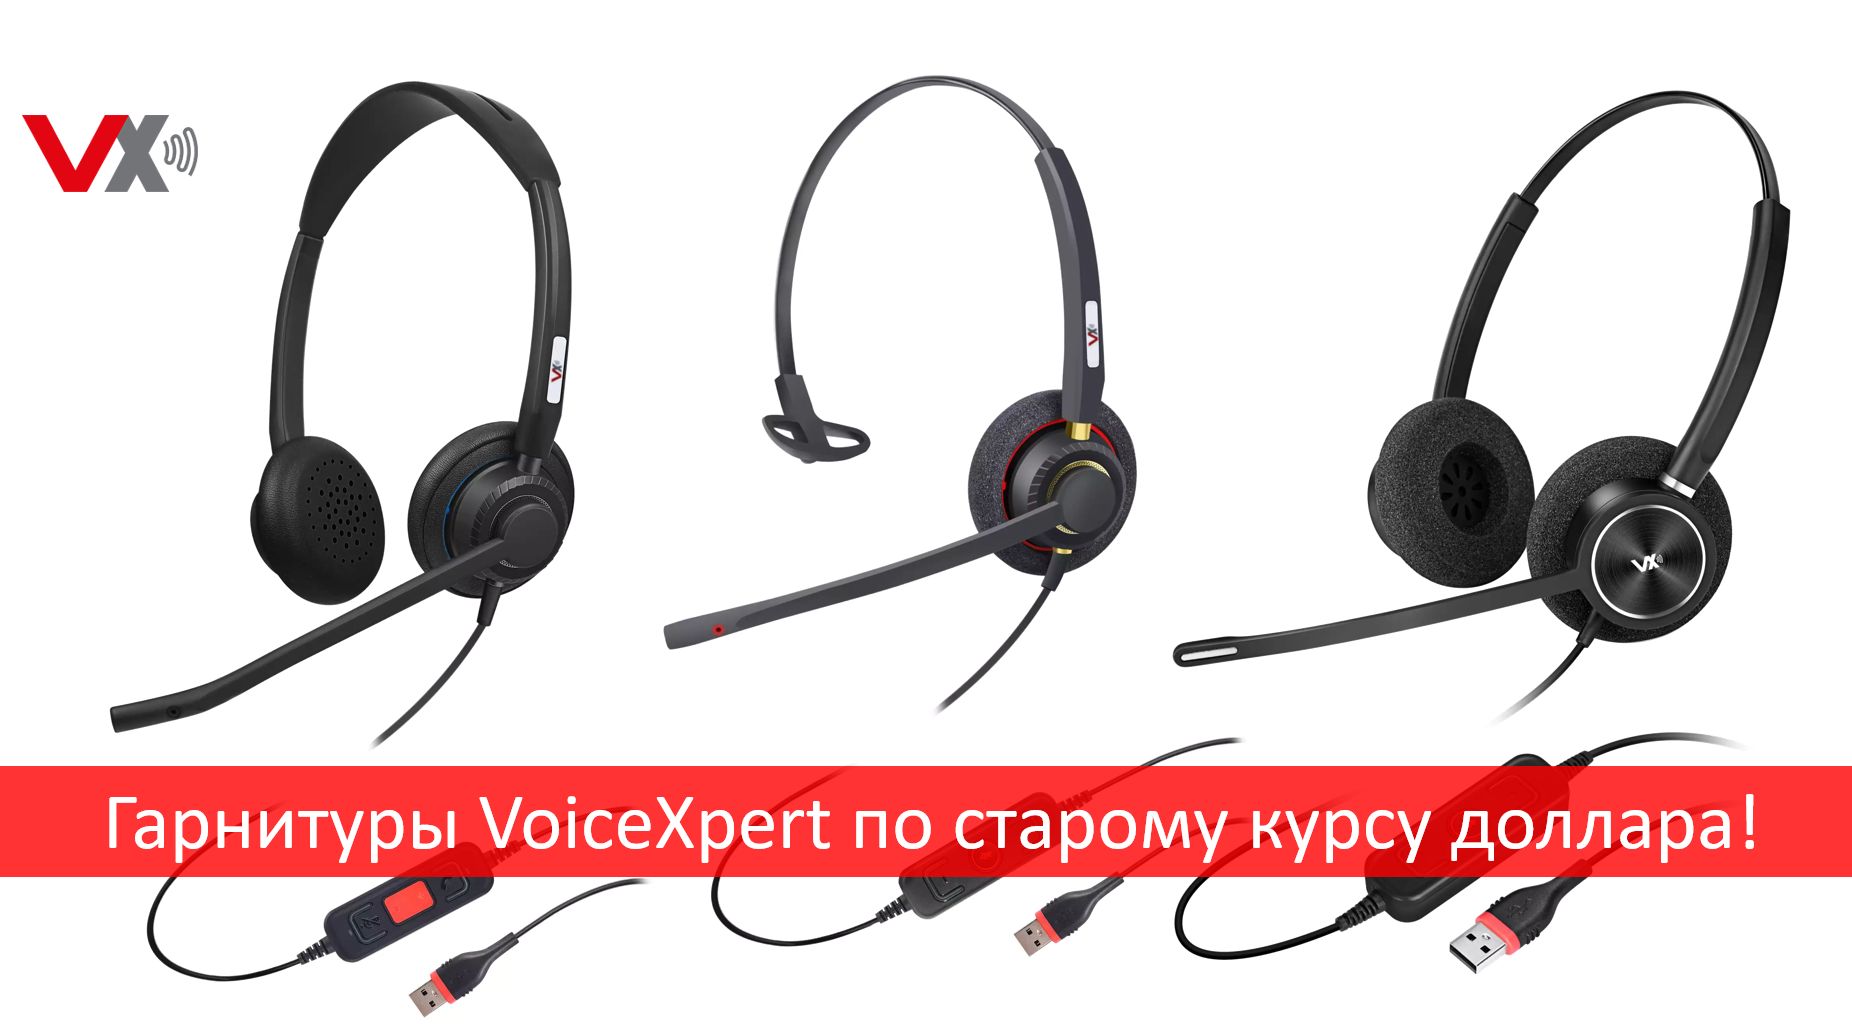 Покупайте гарнитуры VoiceXpert по старому курсу 